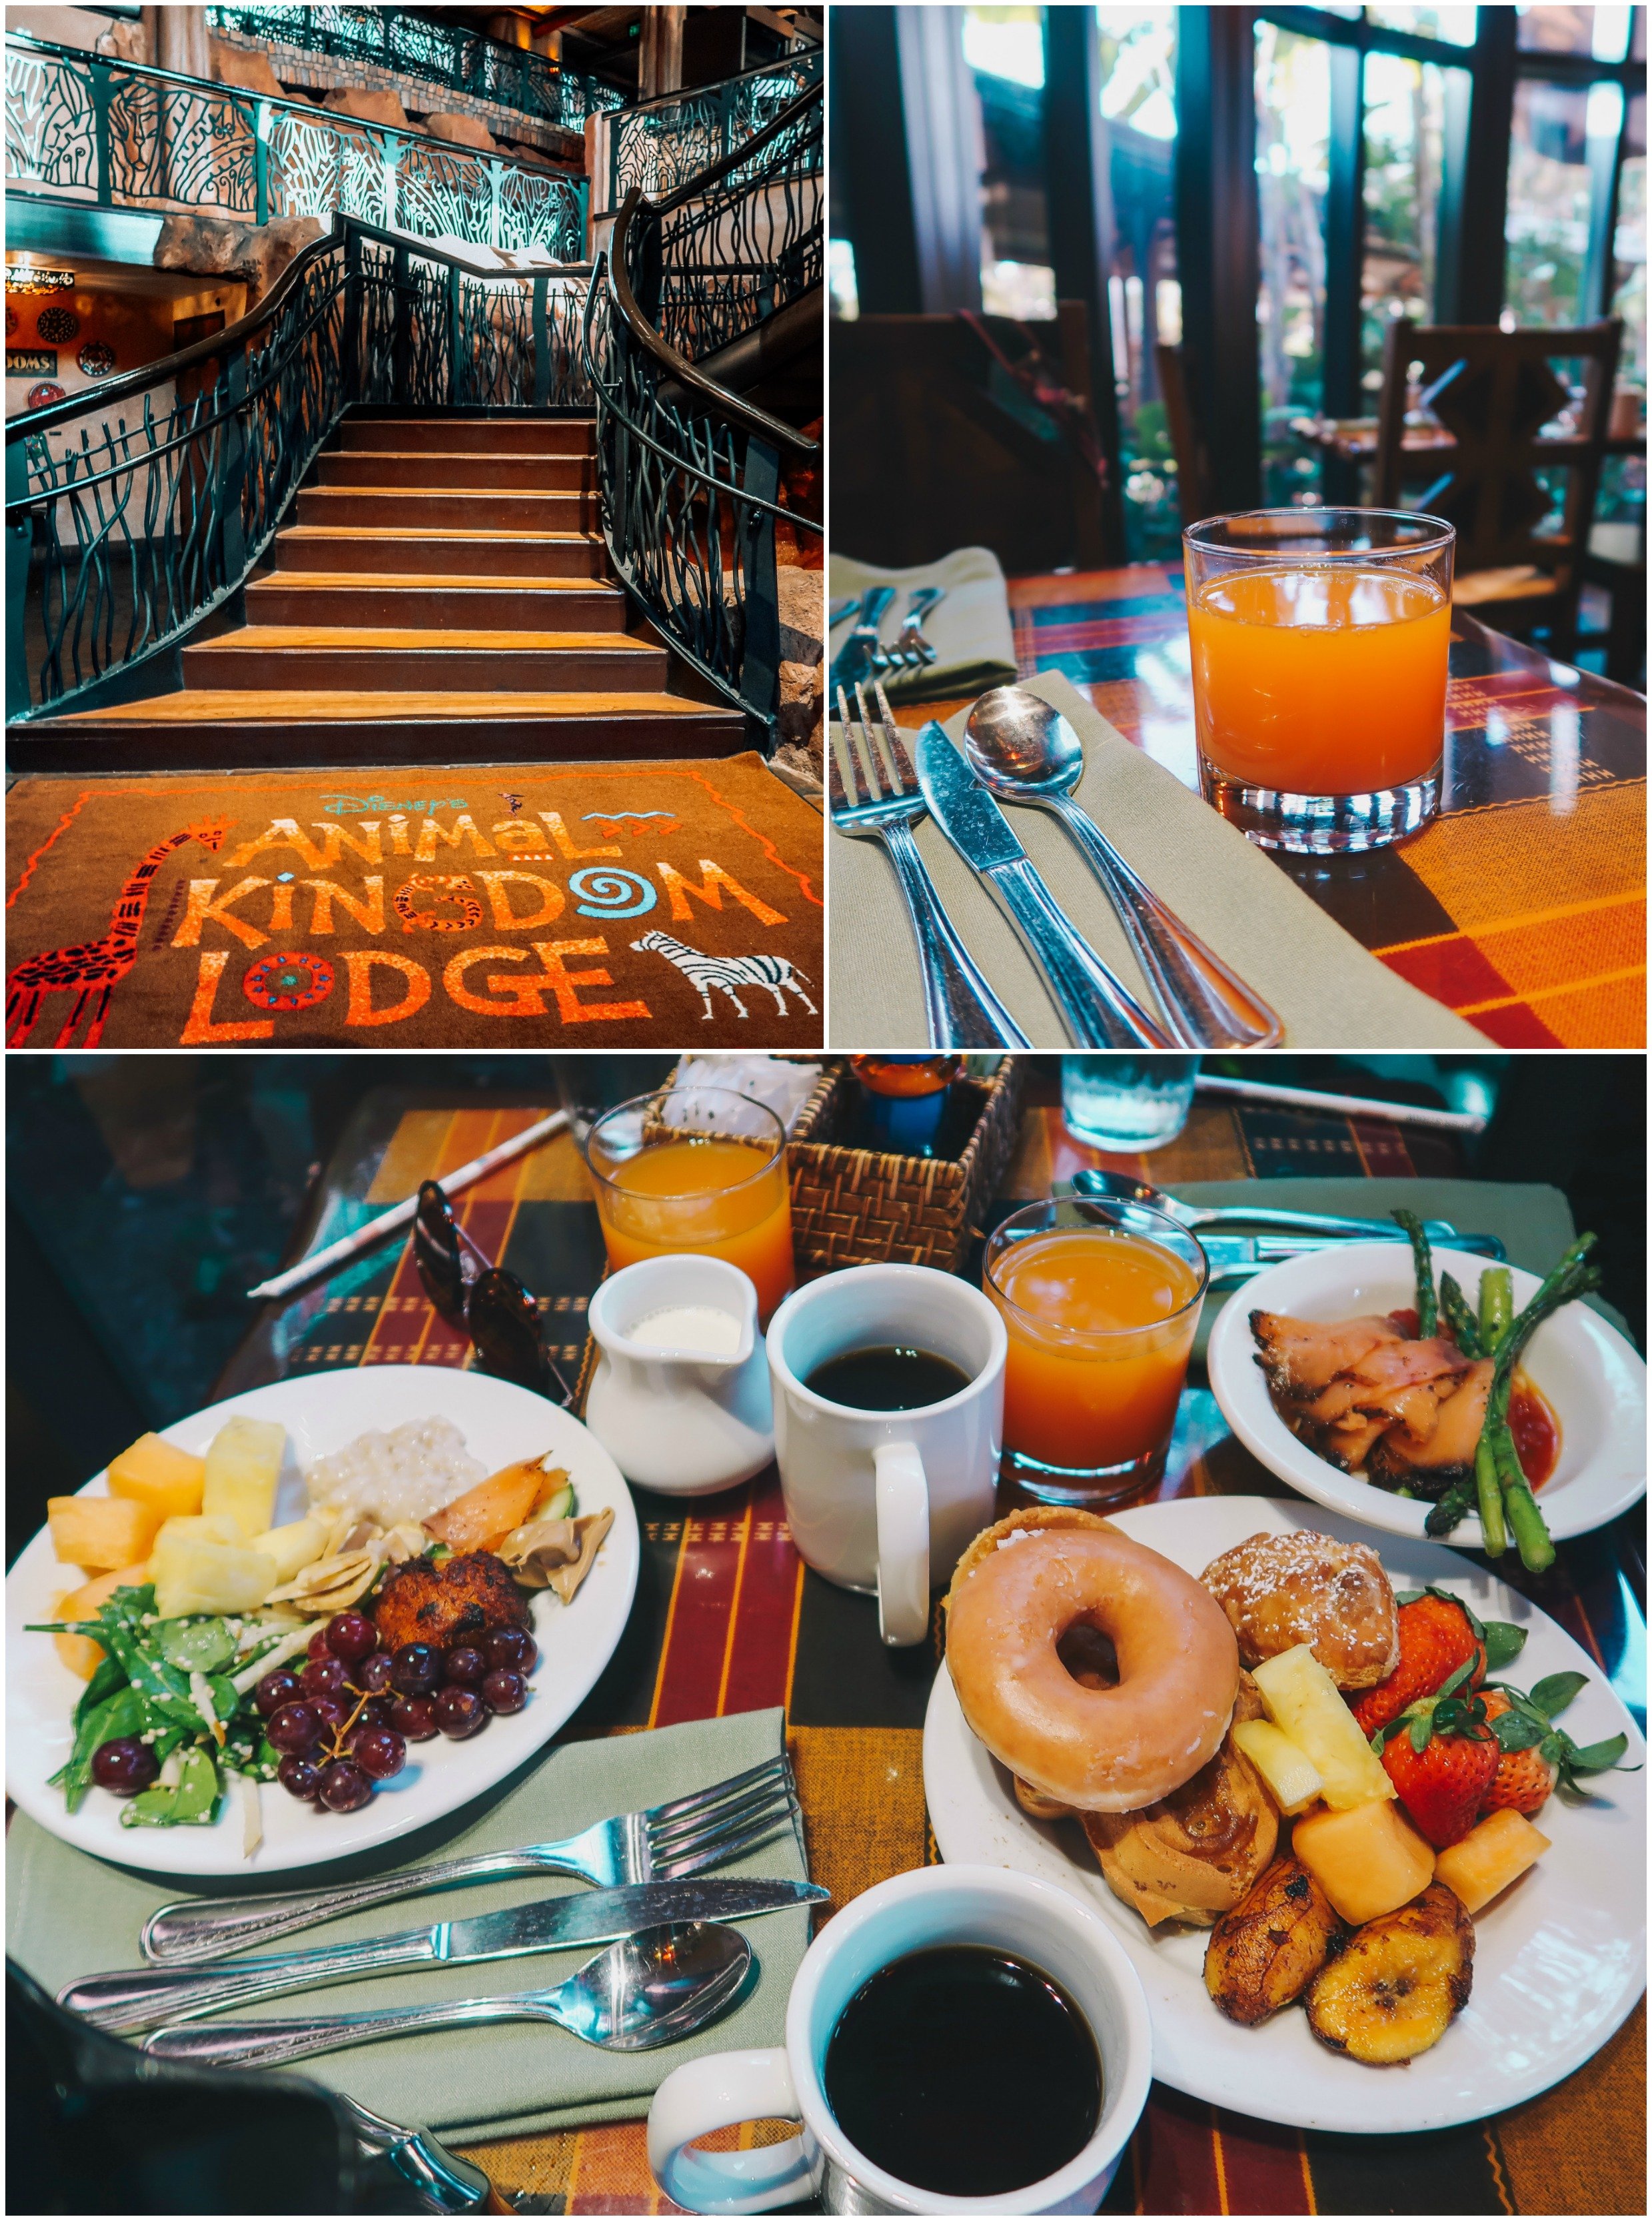 breakfast at boma animal kingdom resort walt disney world travel plans